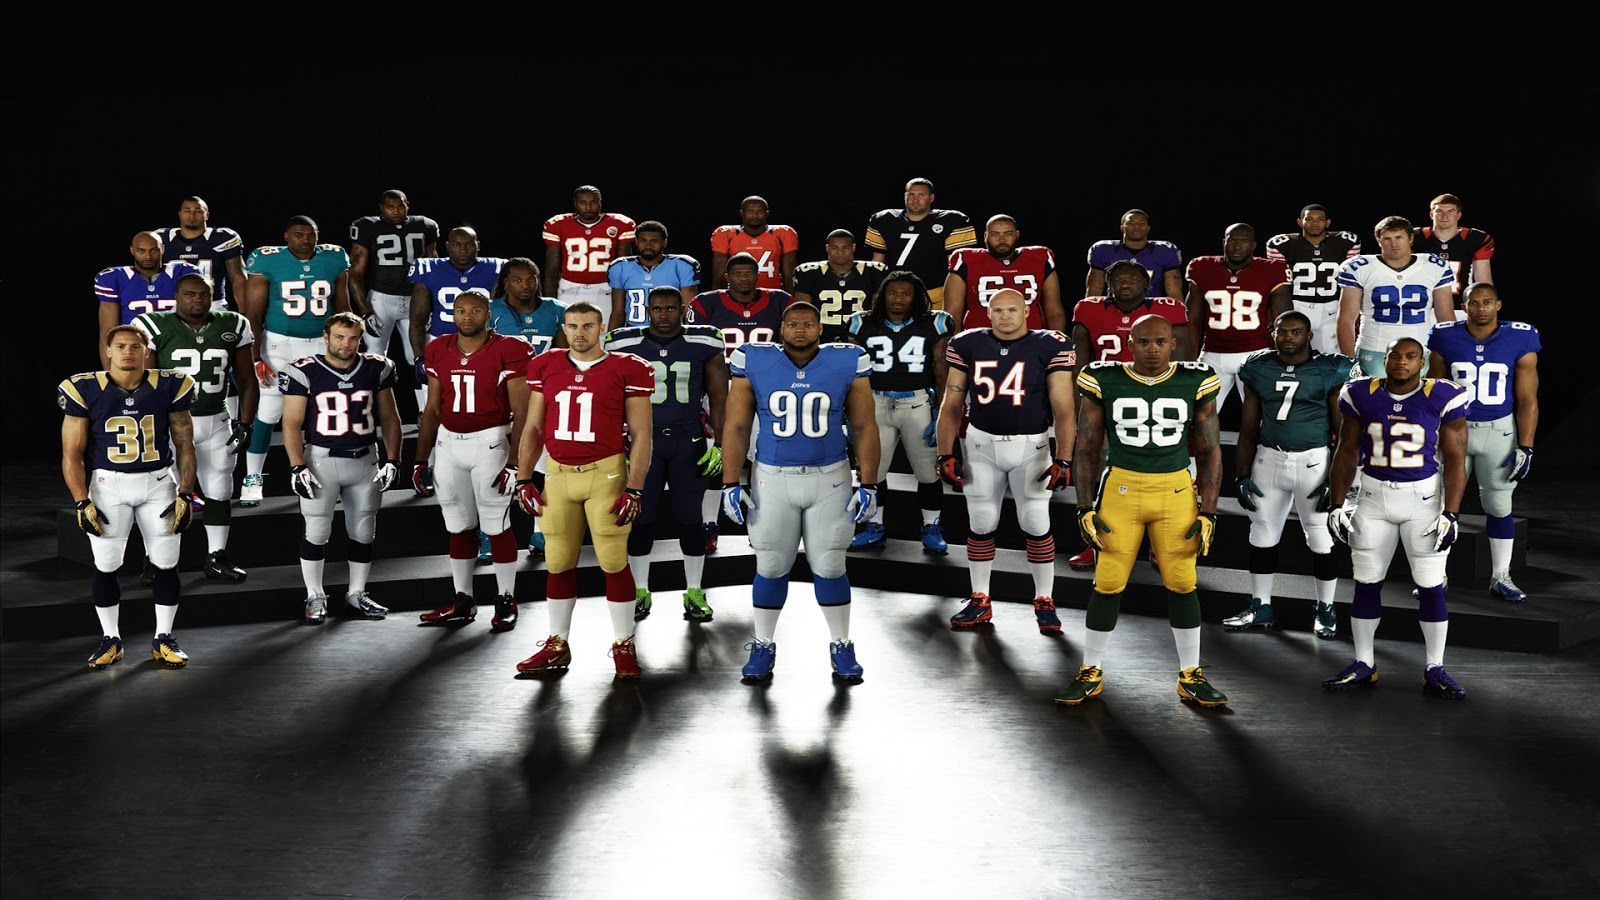 NFL Wide Receiver Wallpaper Free .wallpaperaccess.com